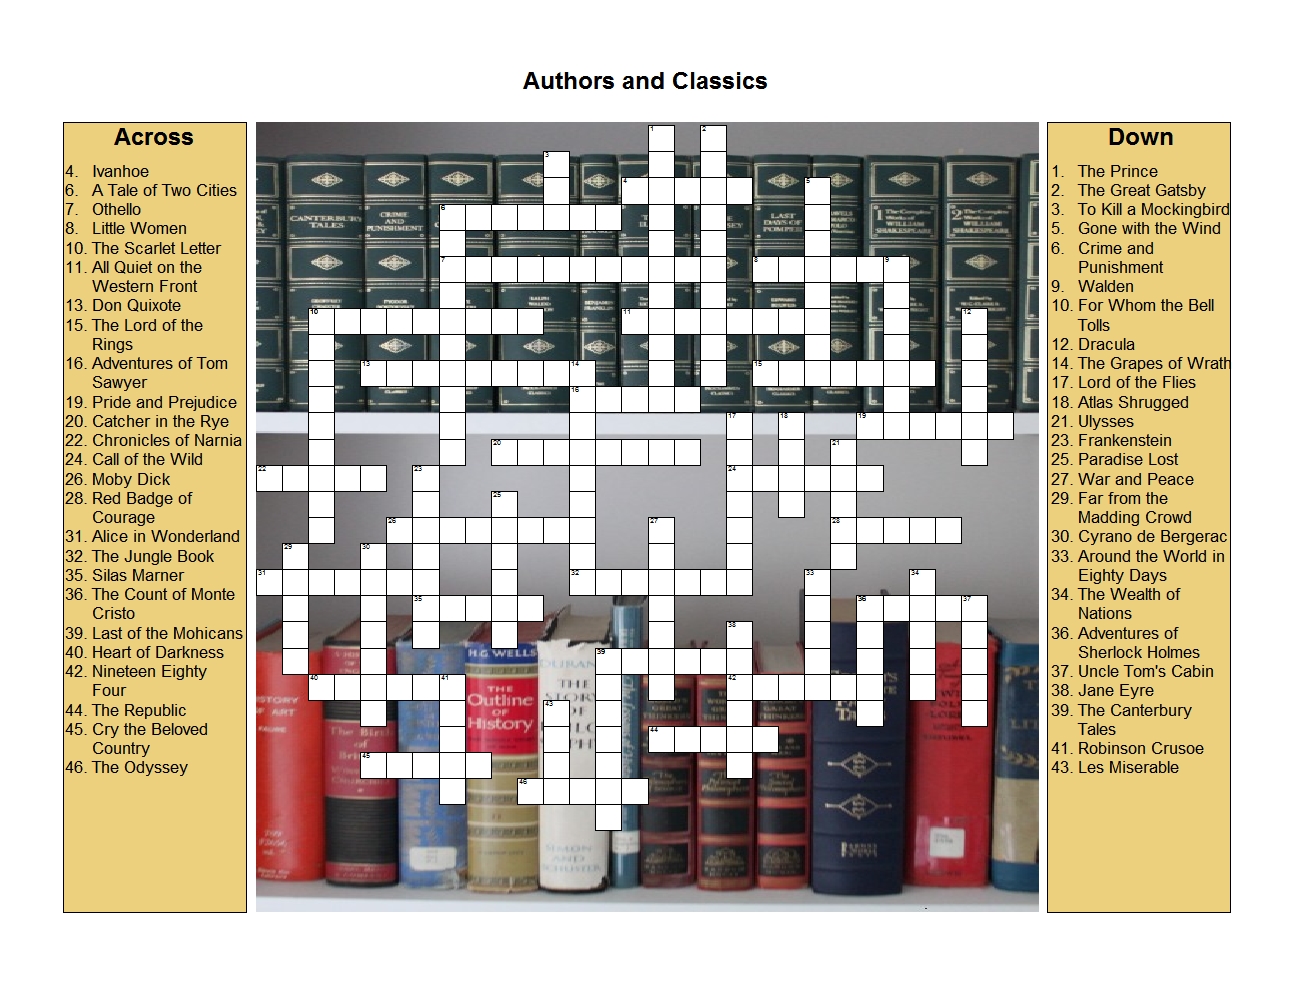 Authors and Classics puzzle